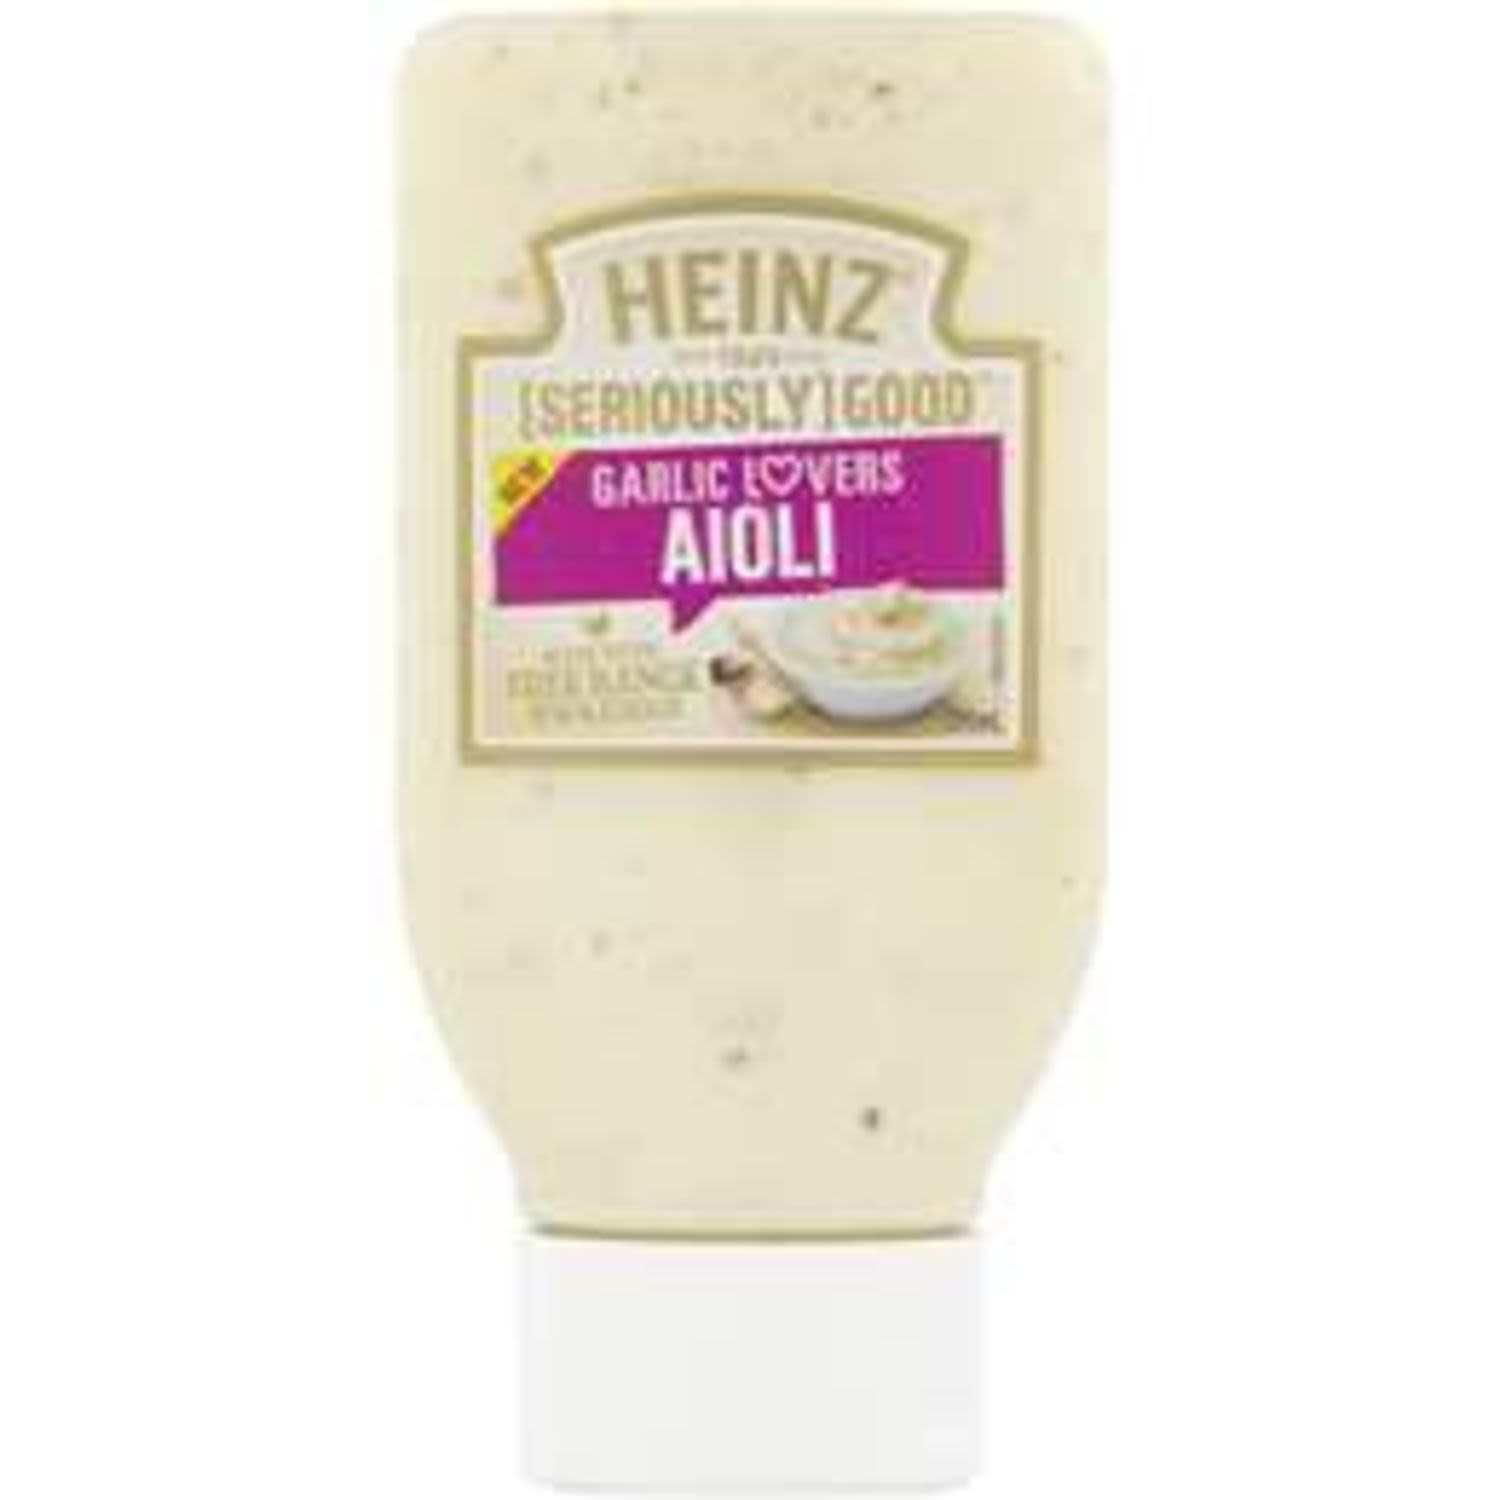 Heinz [Seriously] Good Garlic Aioli Squeezy Bottle, 295 Millilitre